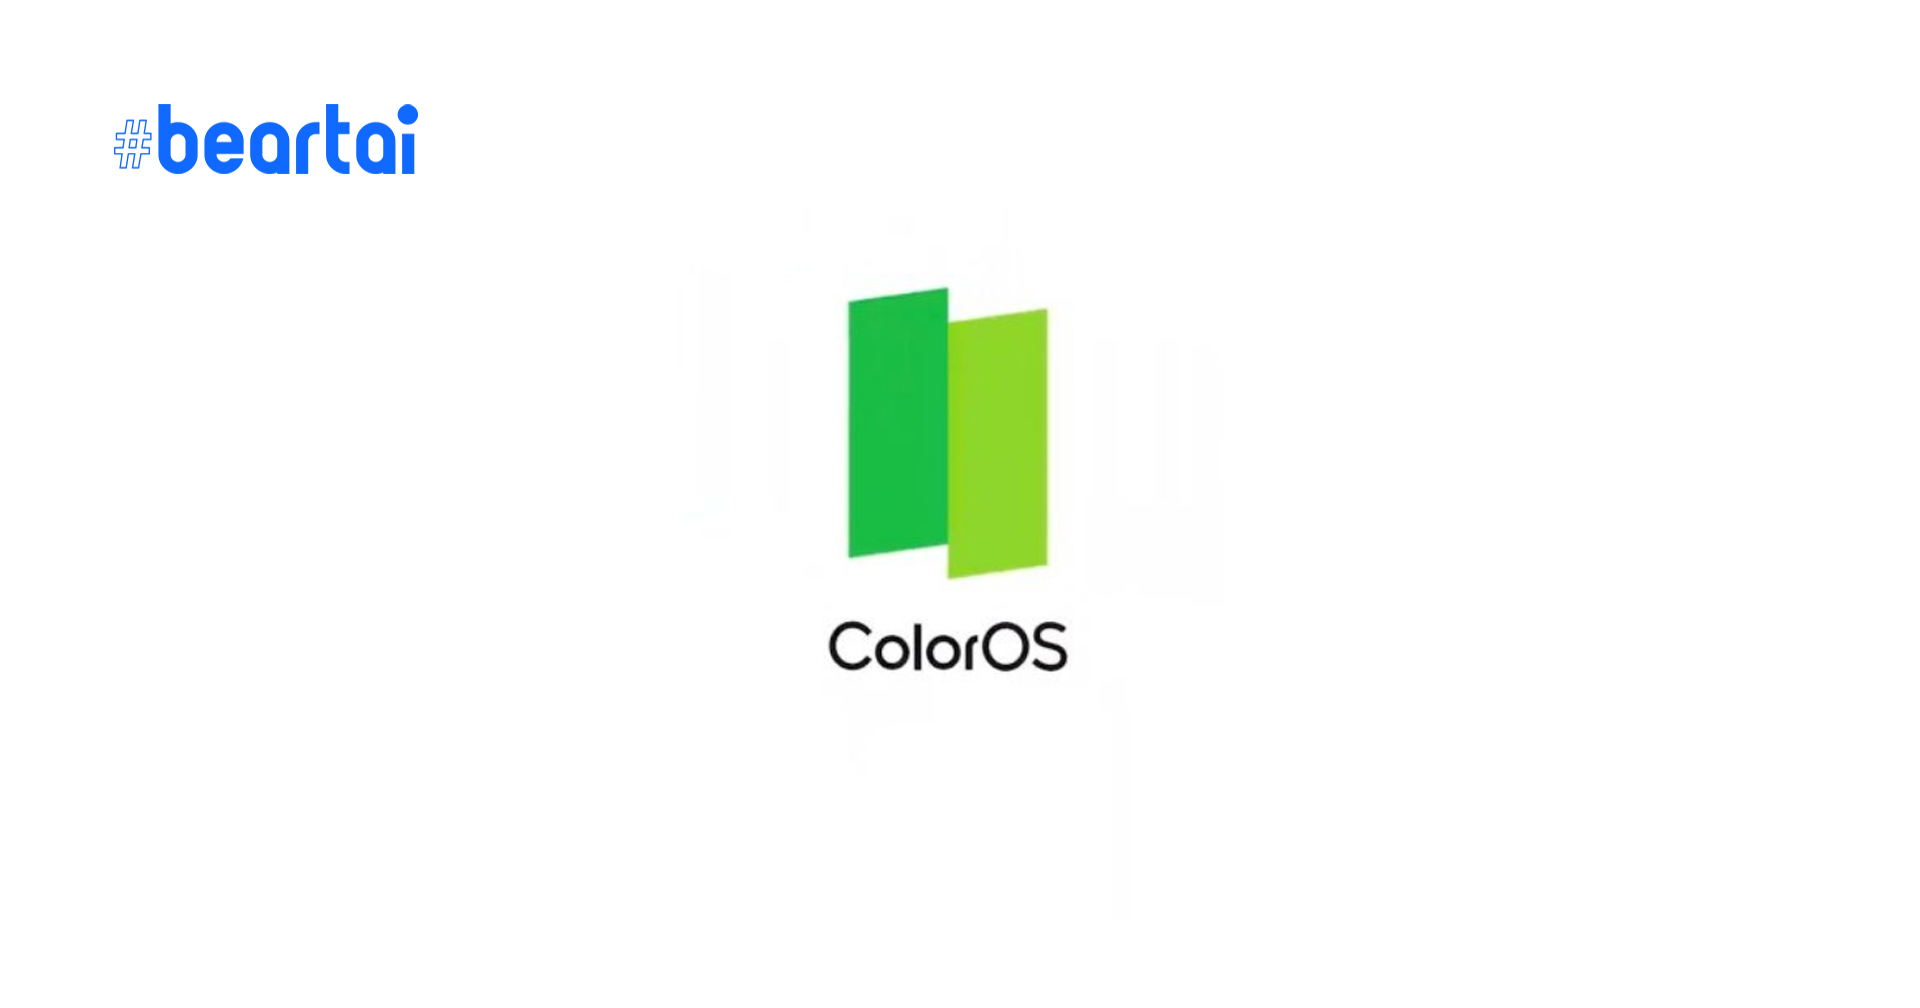 OPPO เปิดตัว ColorOS 11 พื้นฐาน Android 11 ปรับปรุงหน้าตาใหม่ เน้นความปลอดภัย และความลื่นไหลระบบ